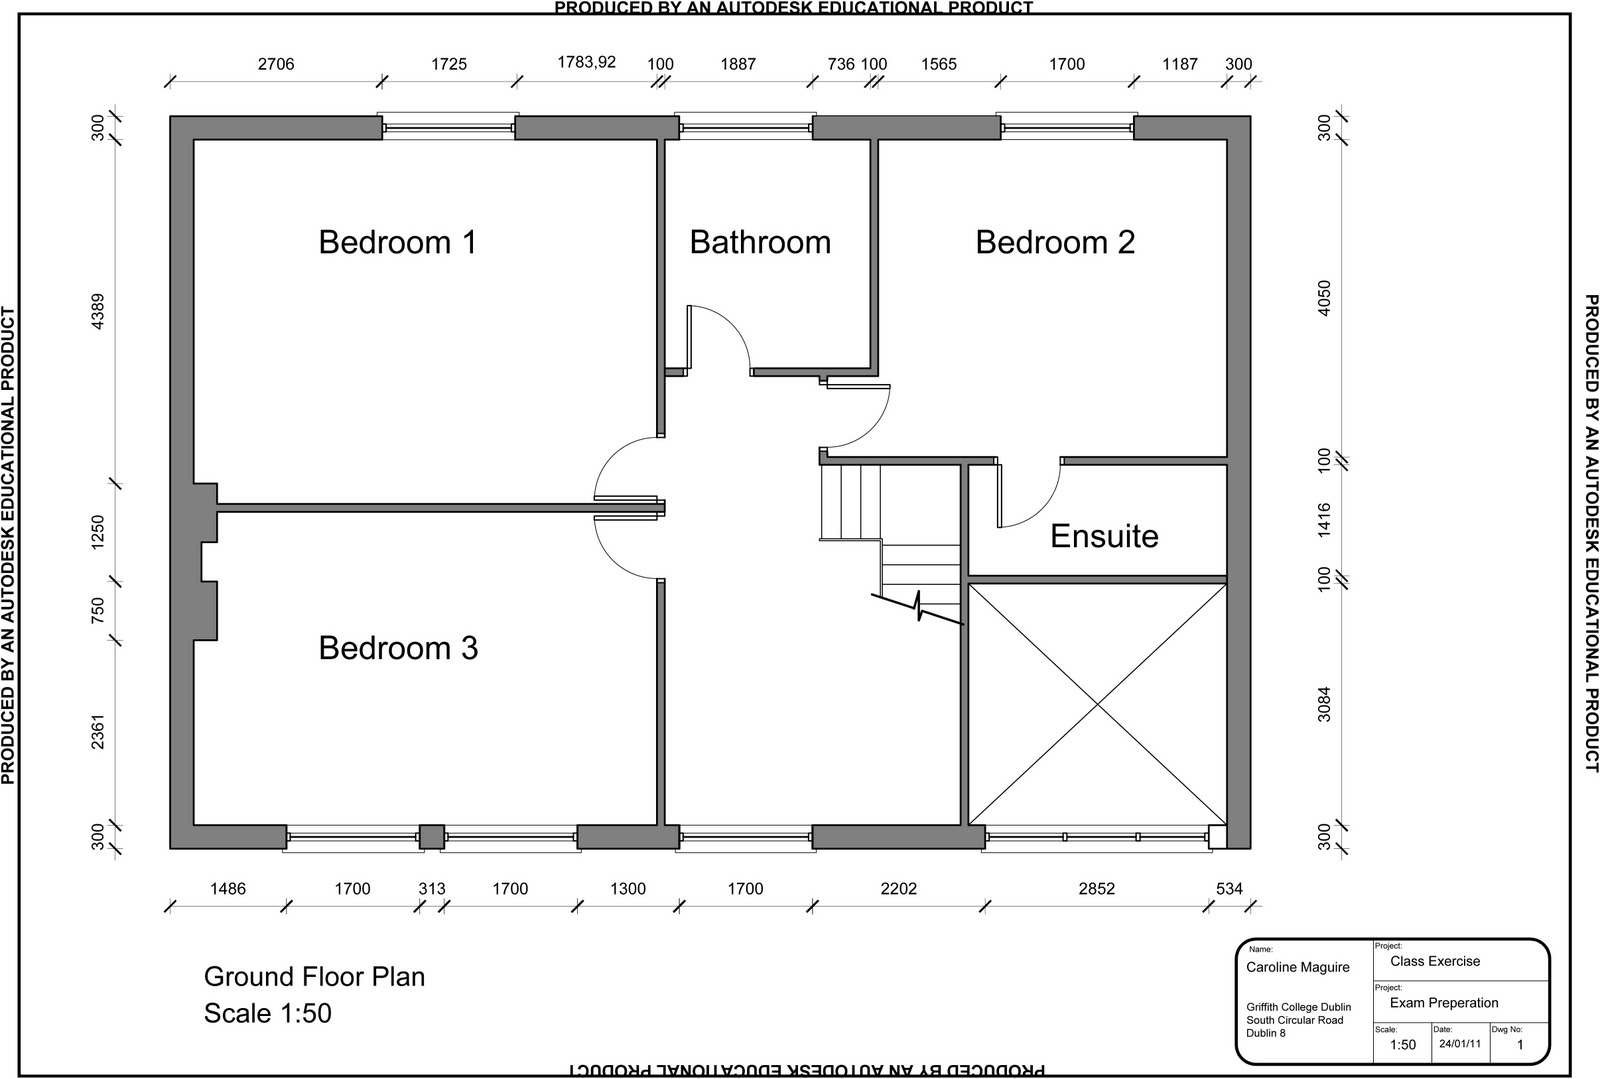 Autocad Floor Plan Exercises Pdf - floorplans.click